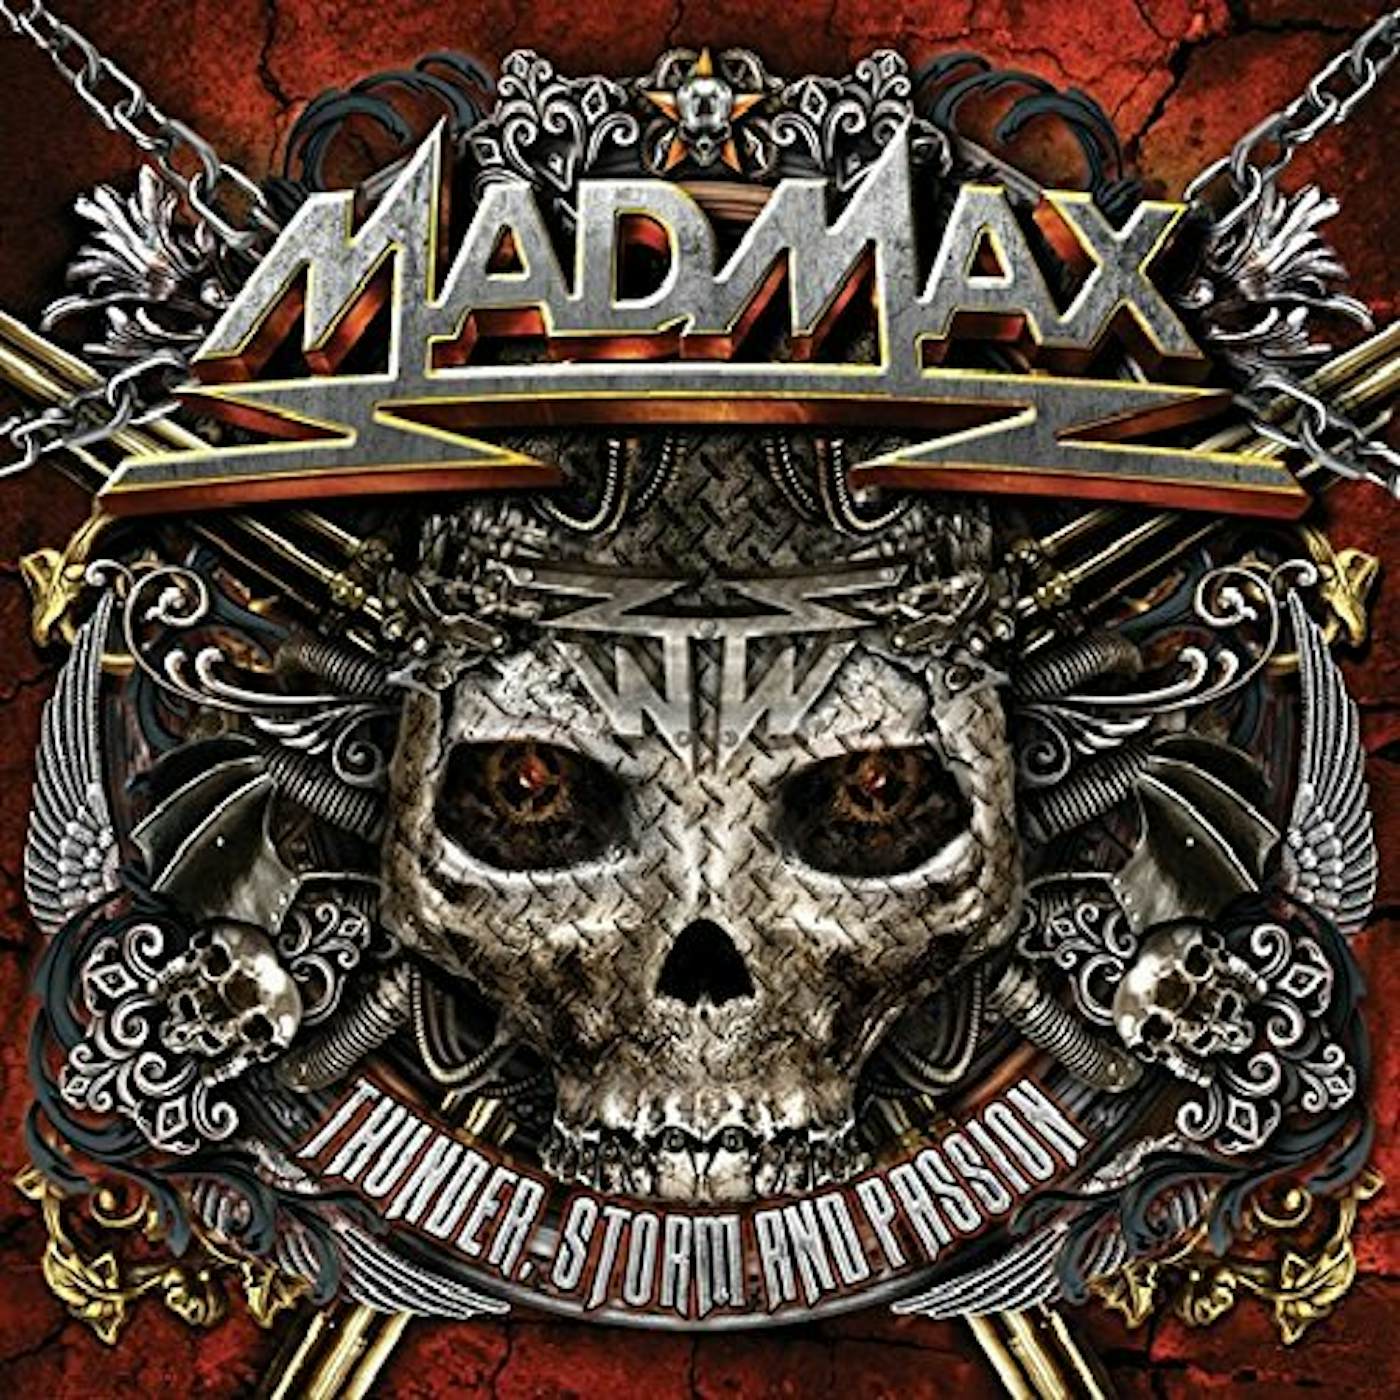 Mad Max THUNDER STORM & PASSION CD